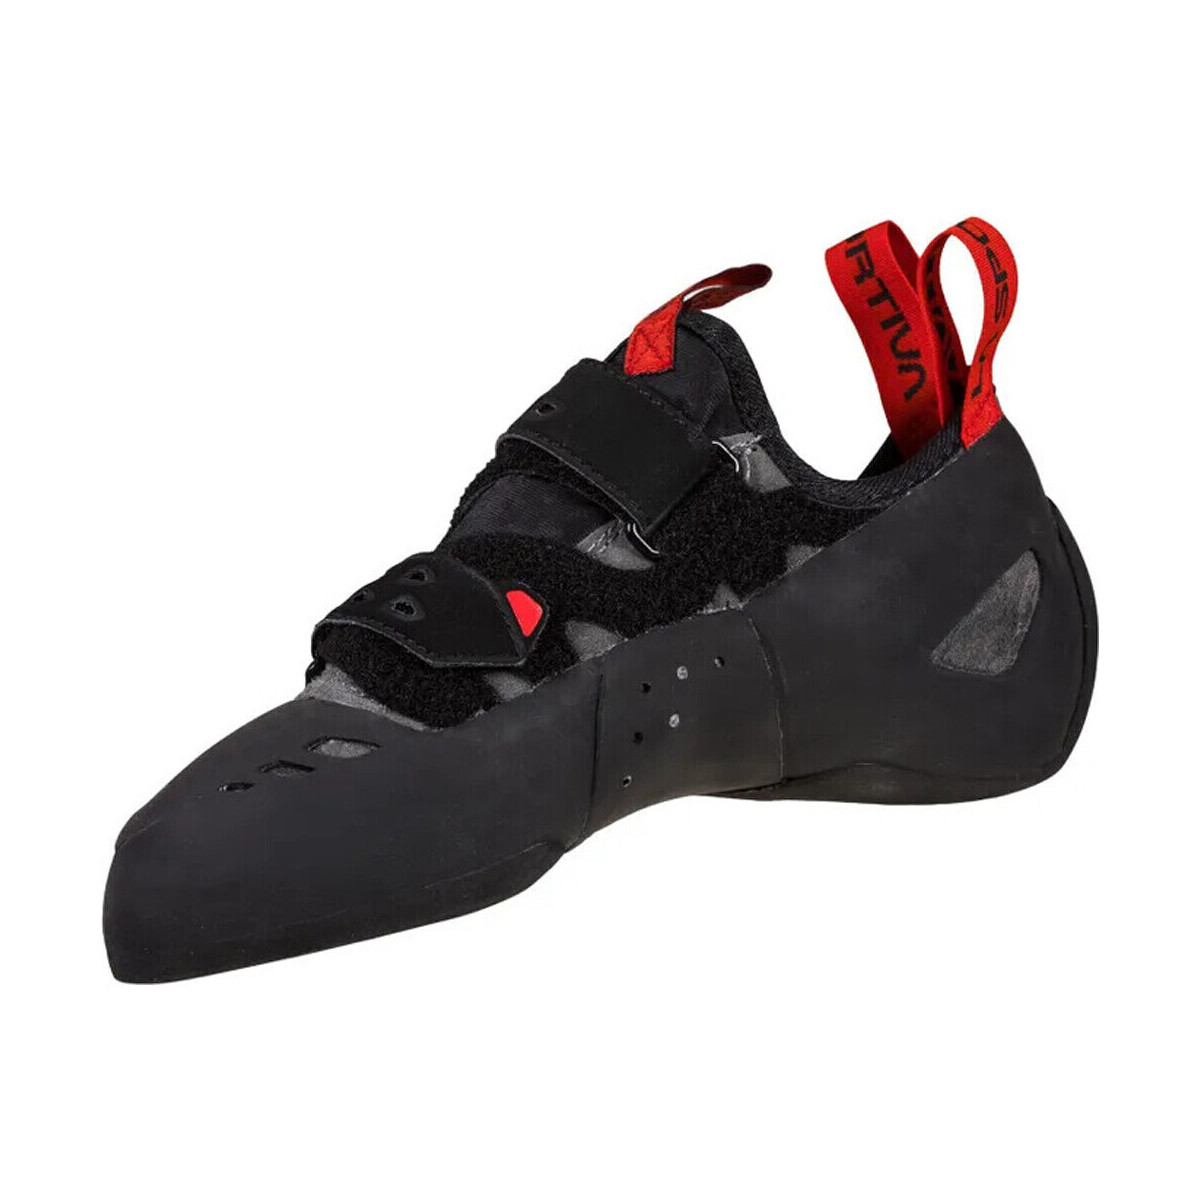 Chaussures Randonnée La Sportiva Tarantula Boulder Noir